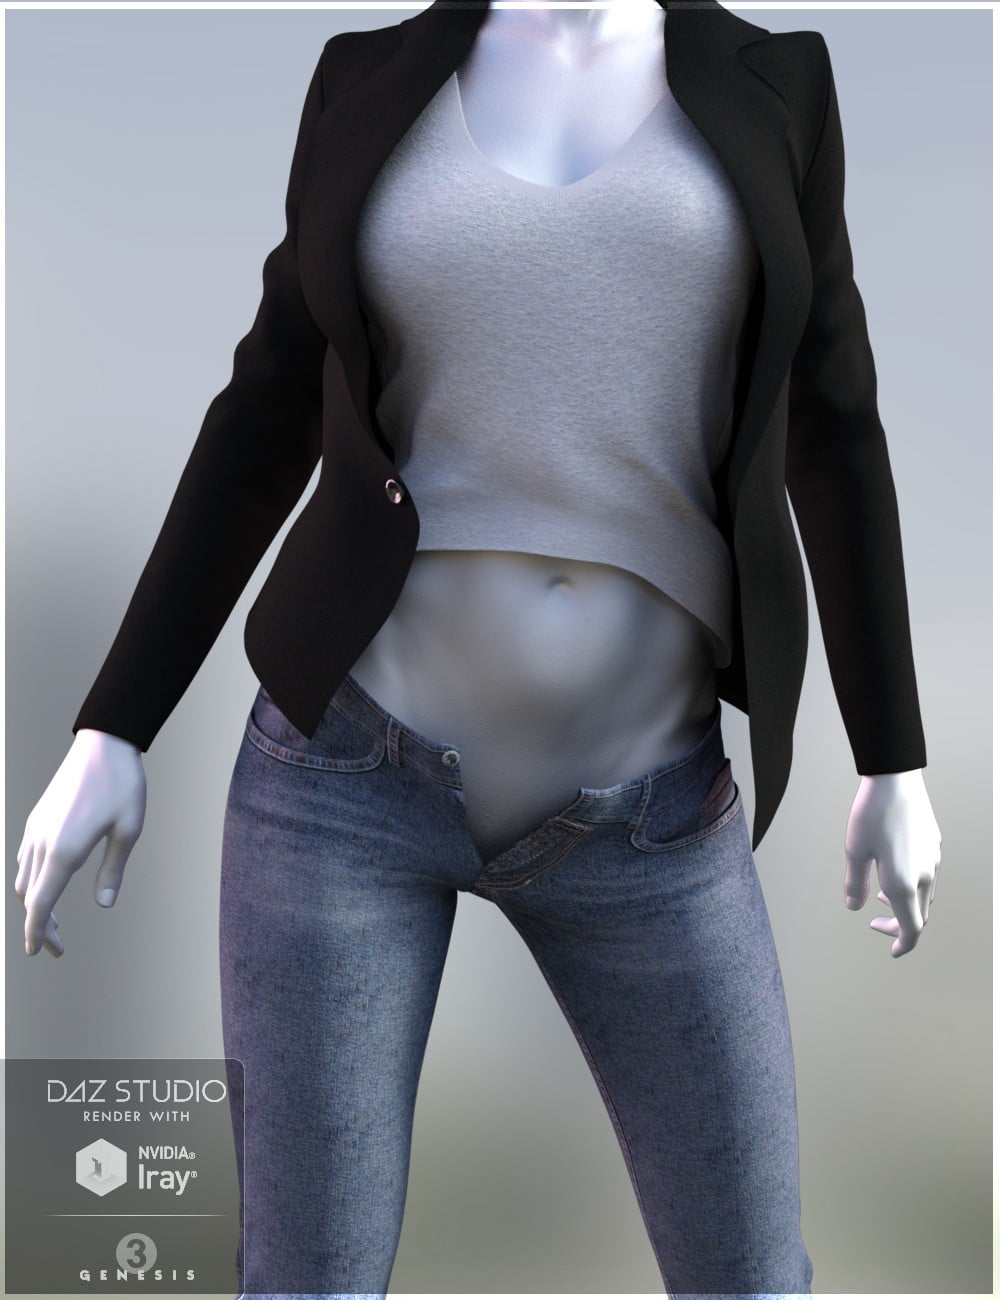 04-blazer-outfit-for-genesis-3-females-daz3d